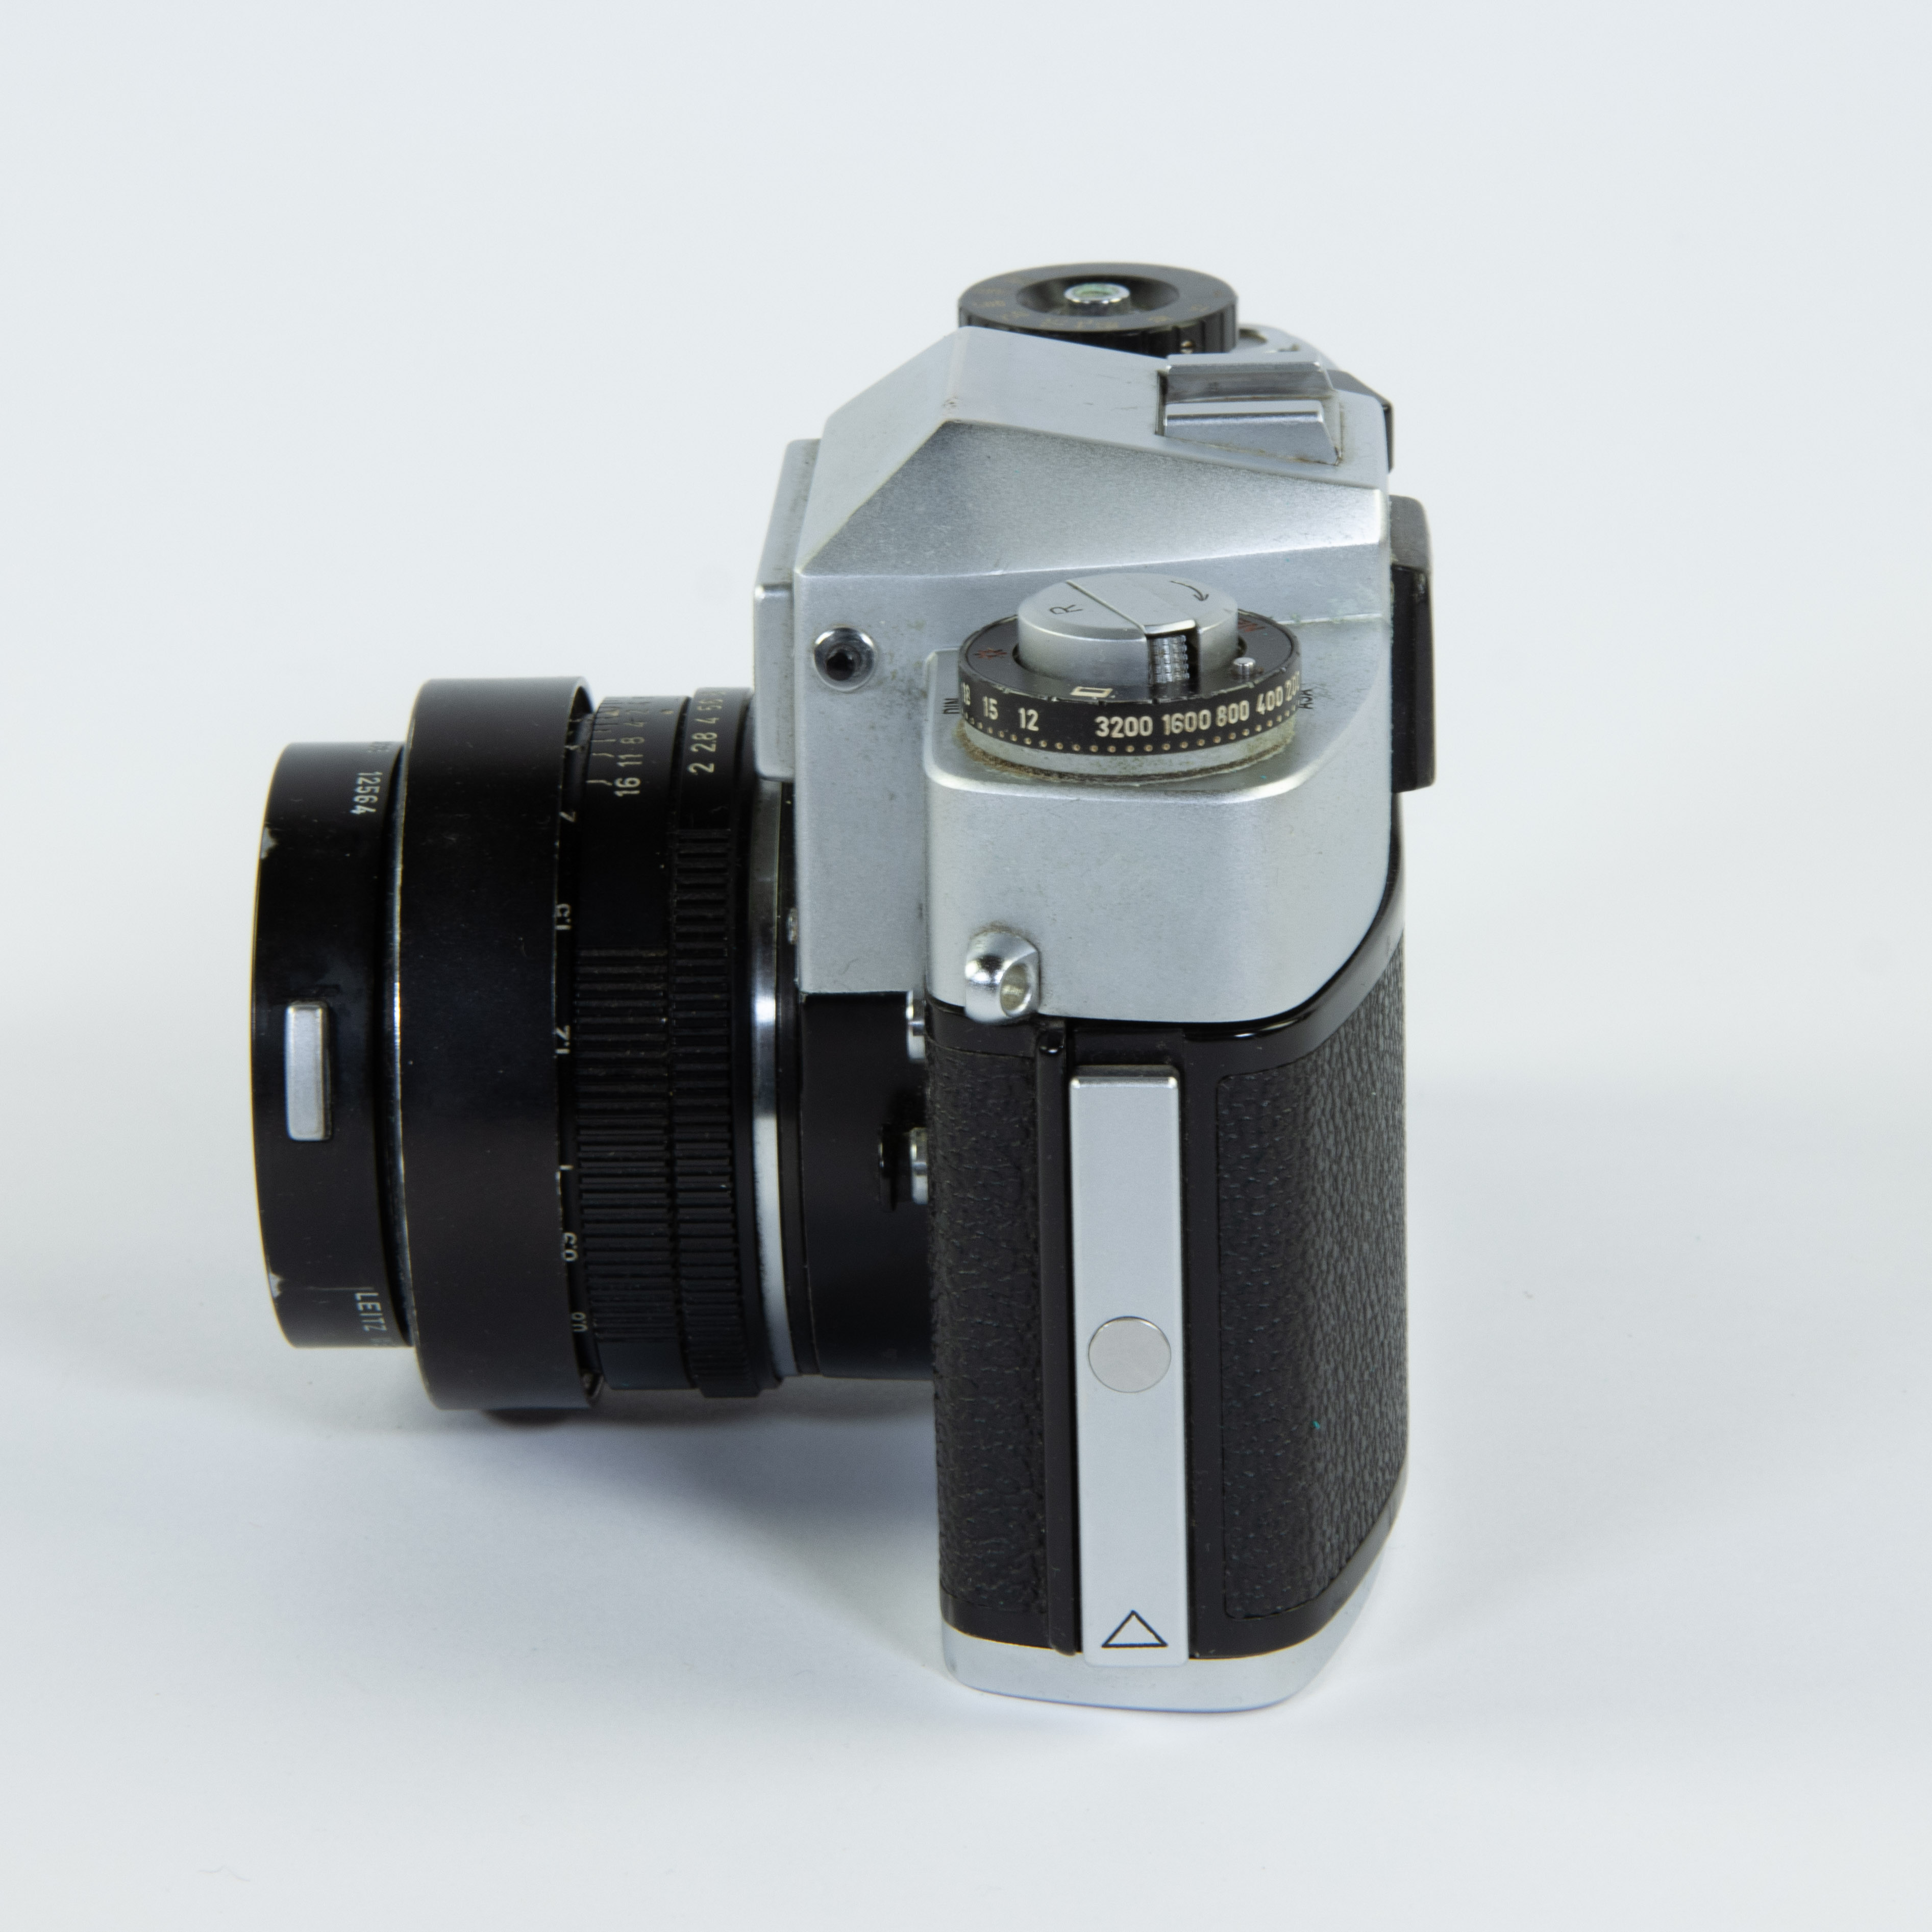 LEICAFLEX camera with accompanying telephoto lens - Image 4 of 11